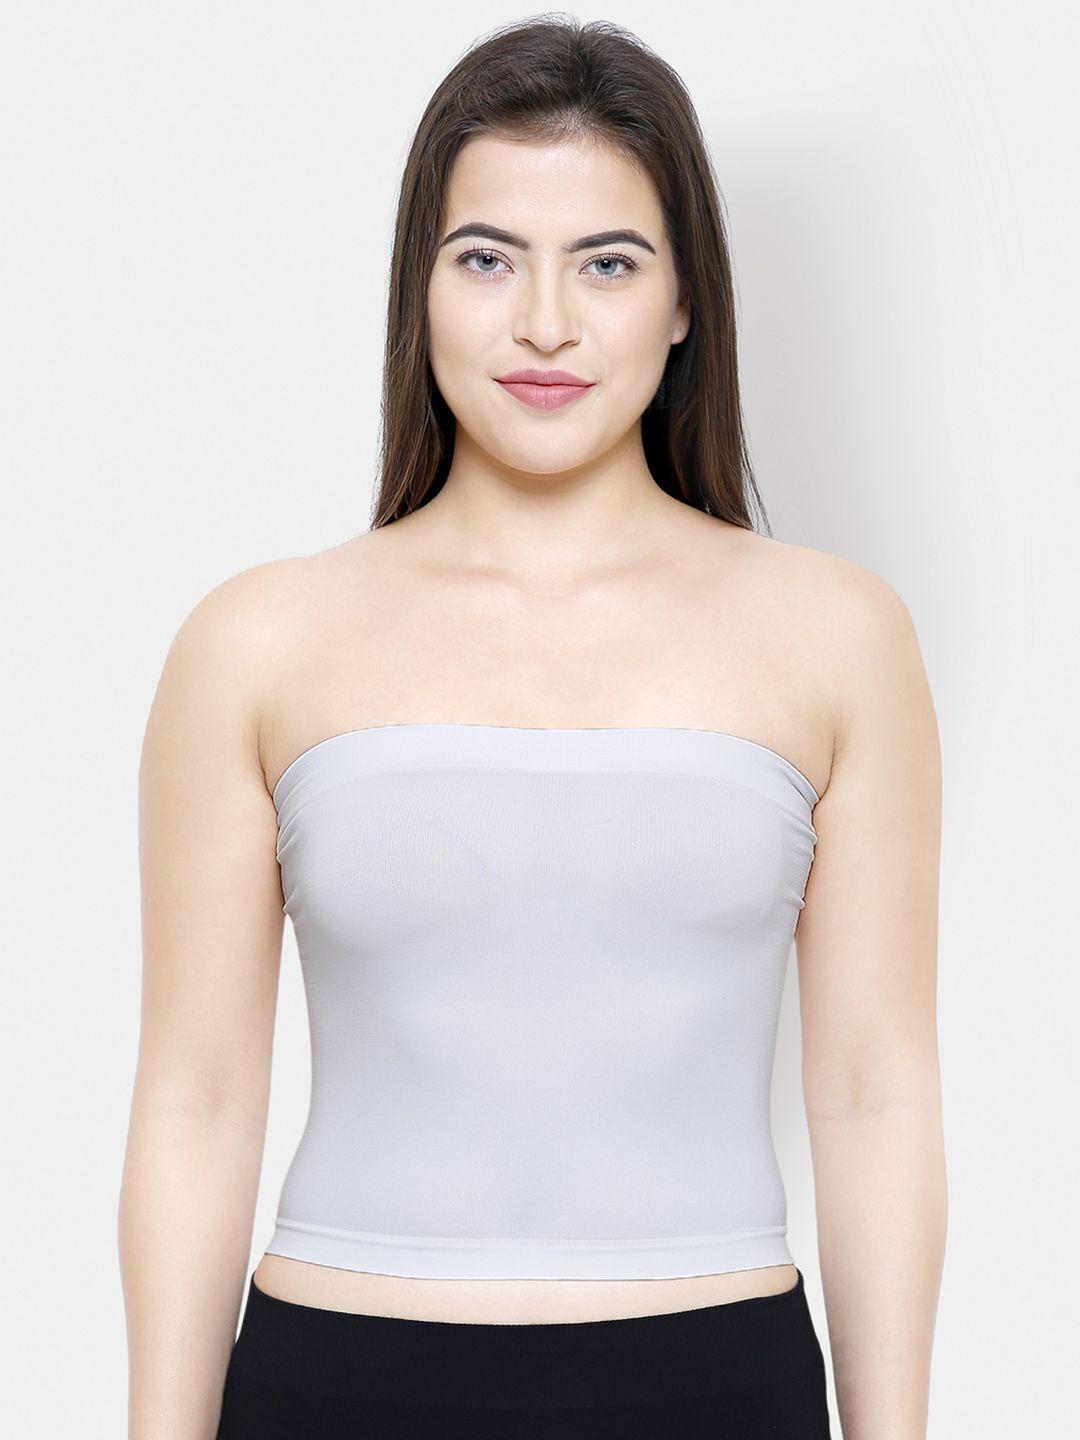 fashionrack women white solid strapless cropped camisole 011white